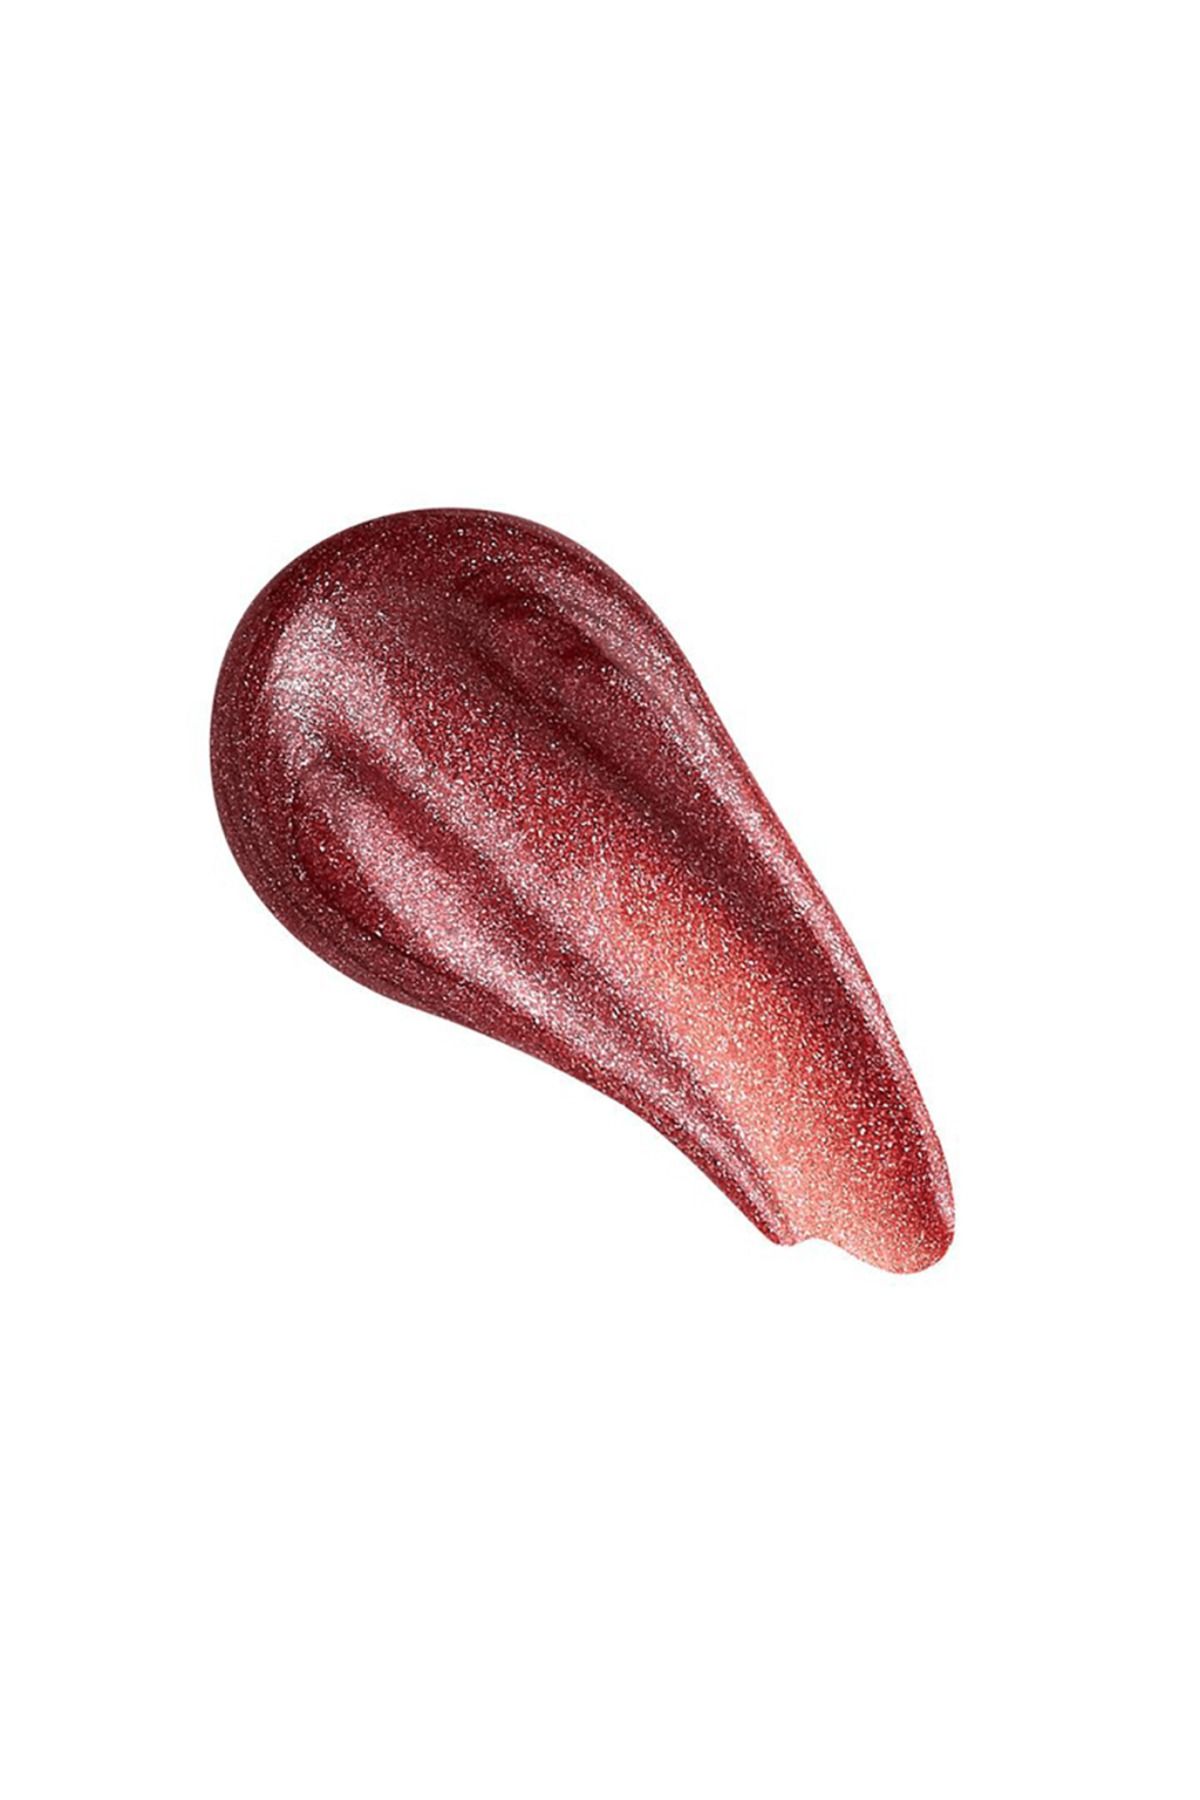 Revolution Shimmer Bomb Dolgunlaştırıcı Distortion Lip Gloss